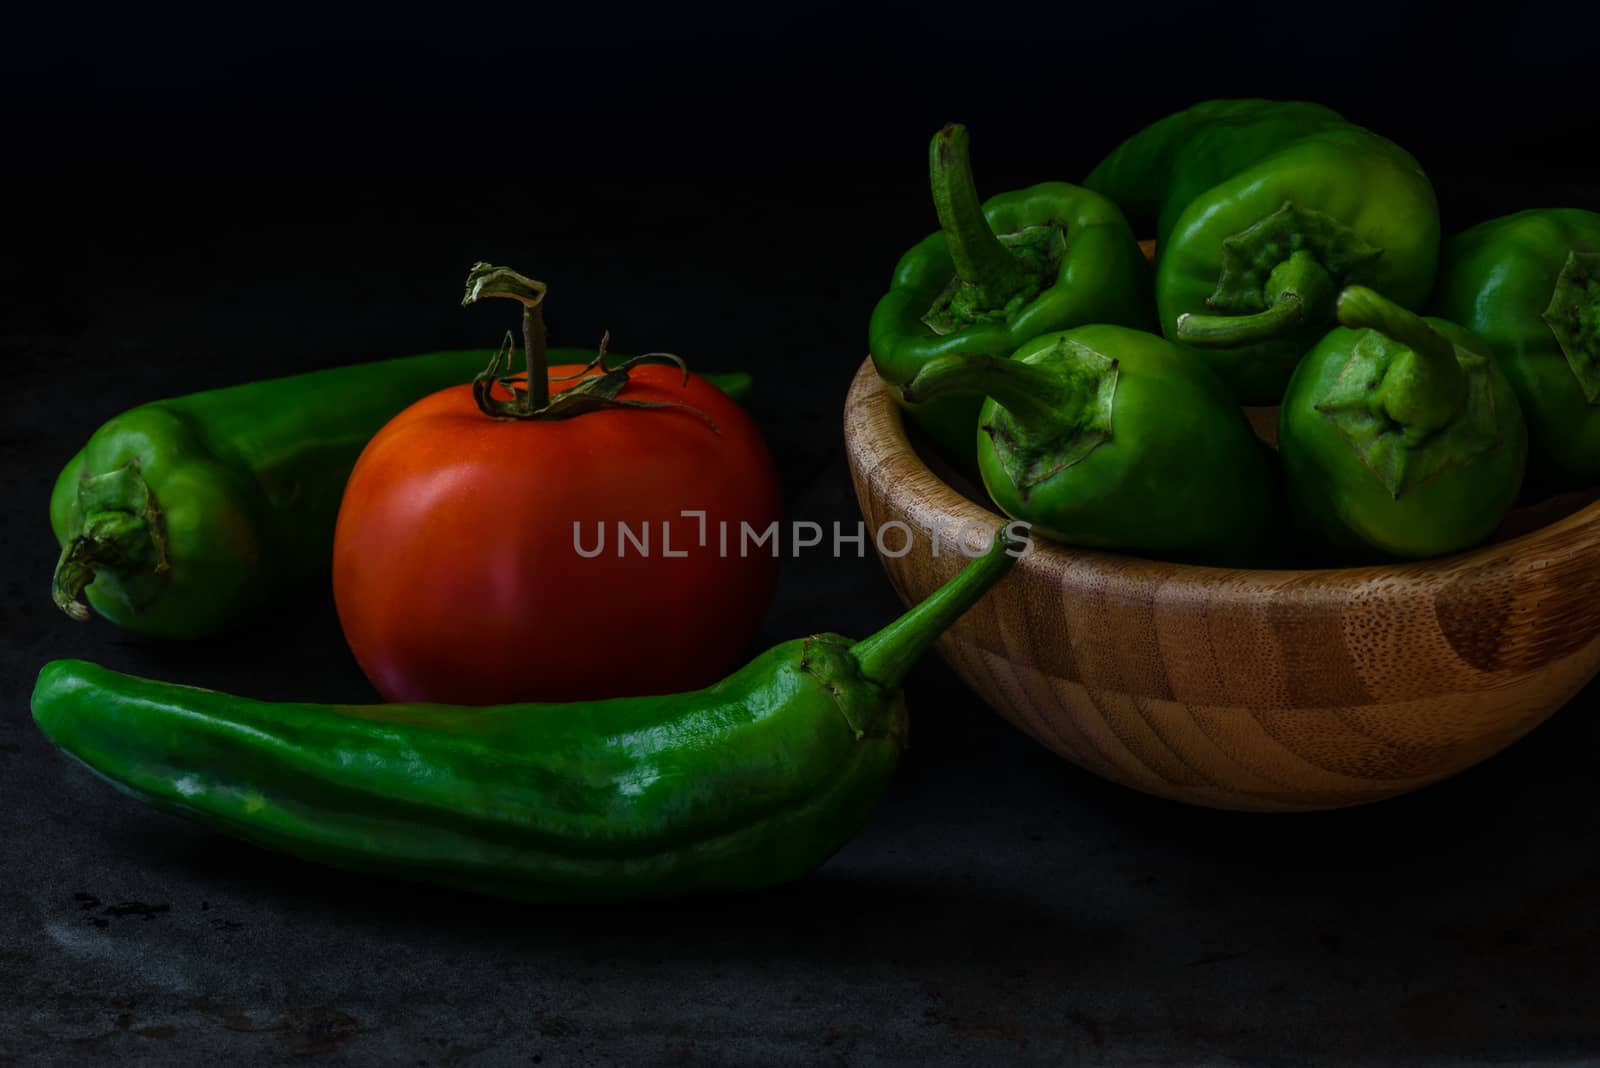 chili pepper and tomato on dark background by Seva_blsv